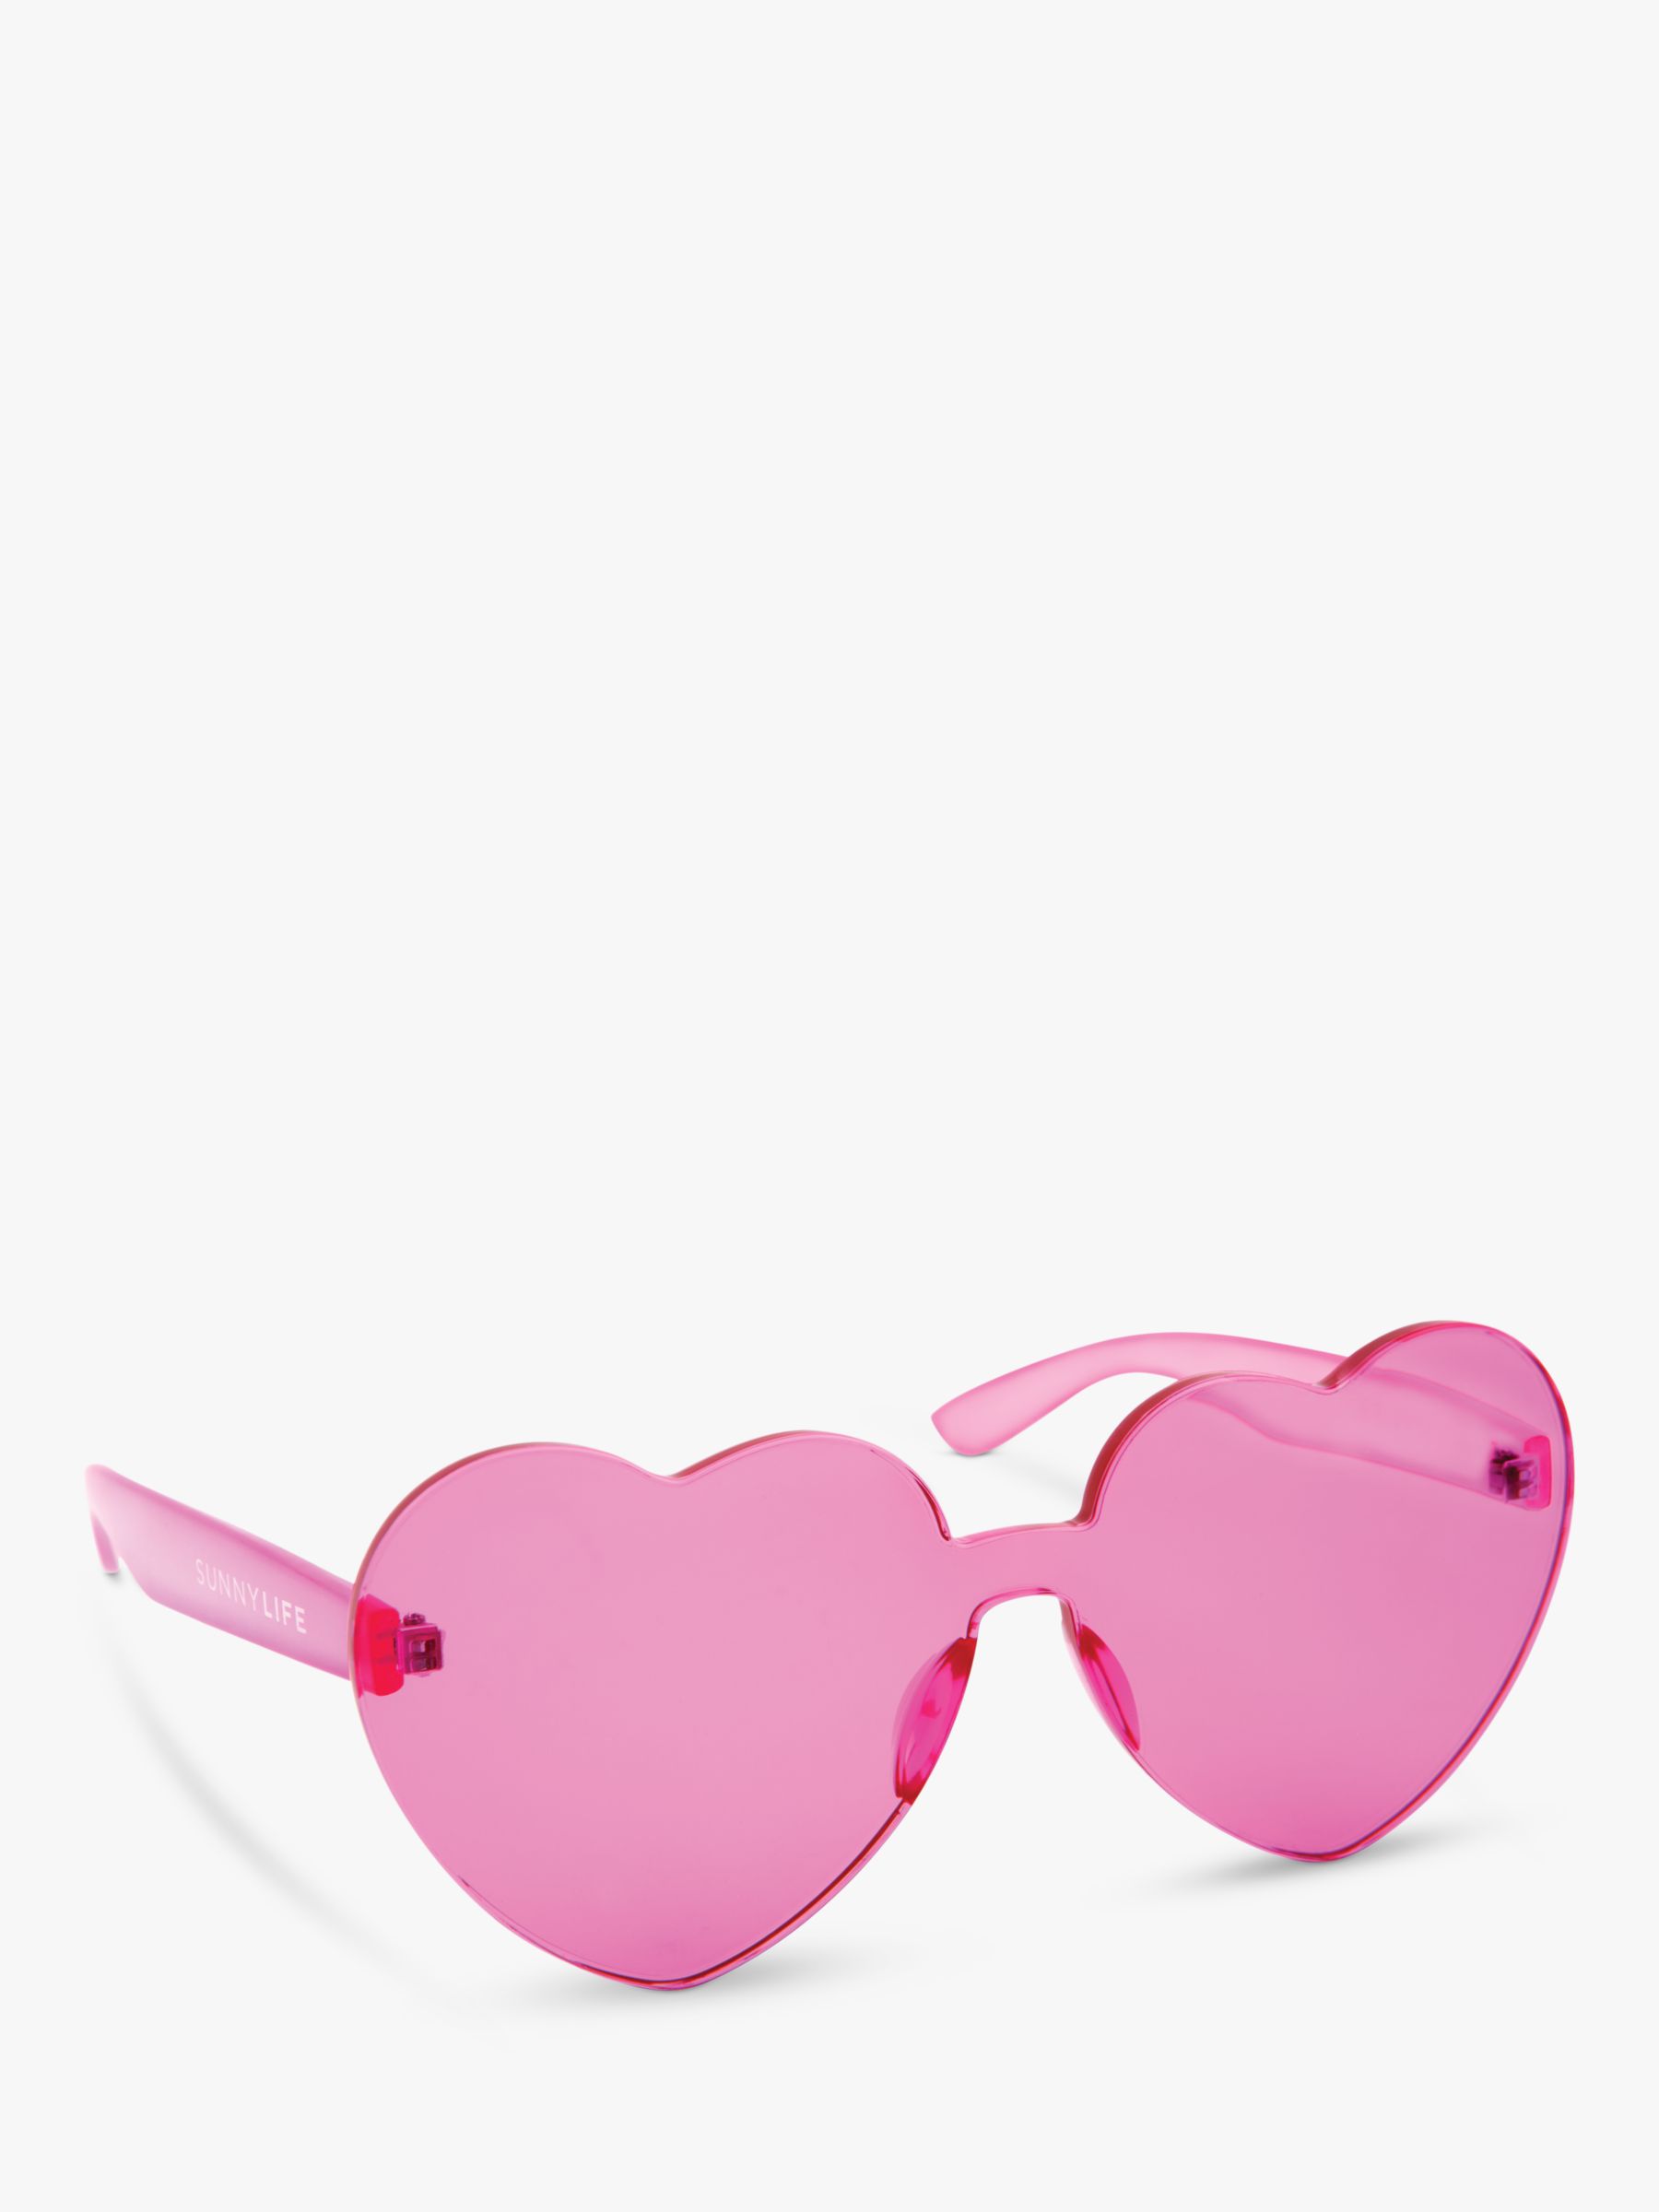 Sunnylife Pink Heart Sunglasses at John Lewis & Partners